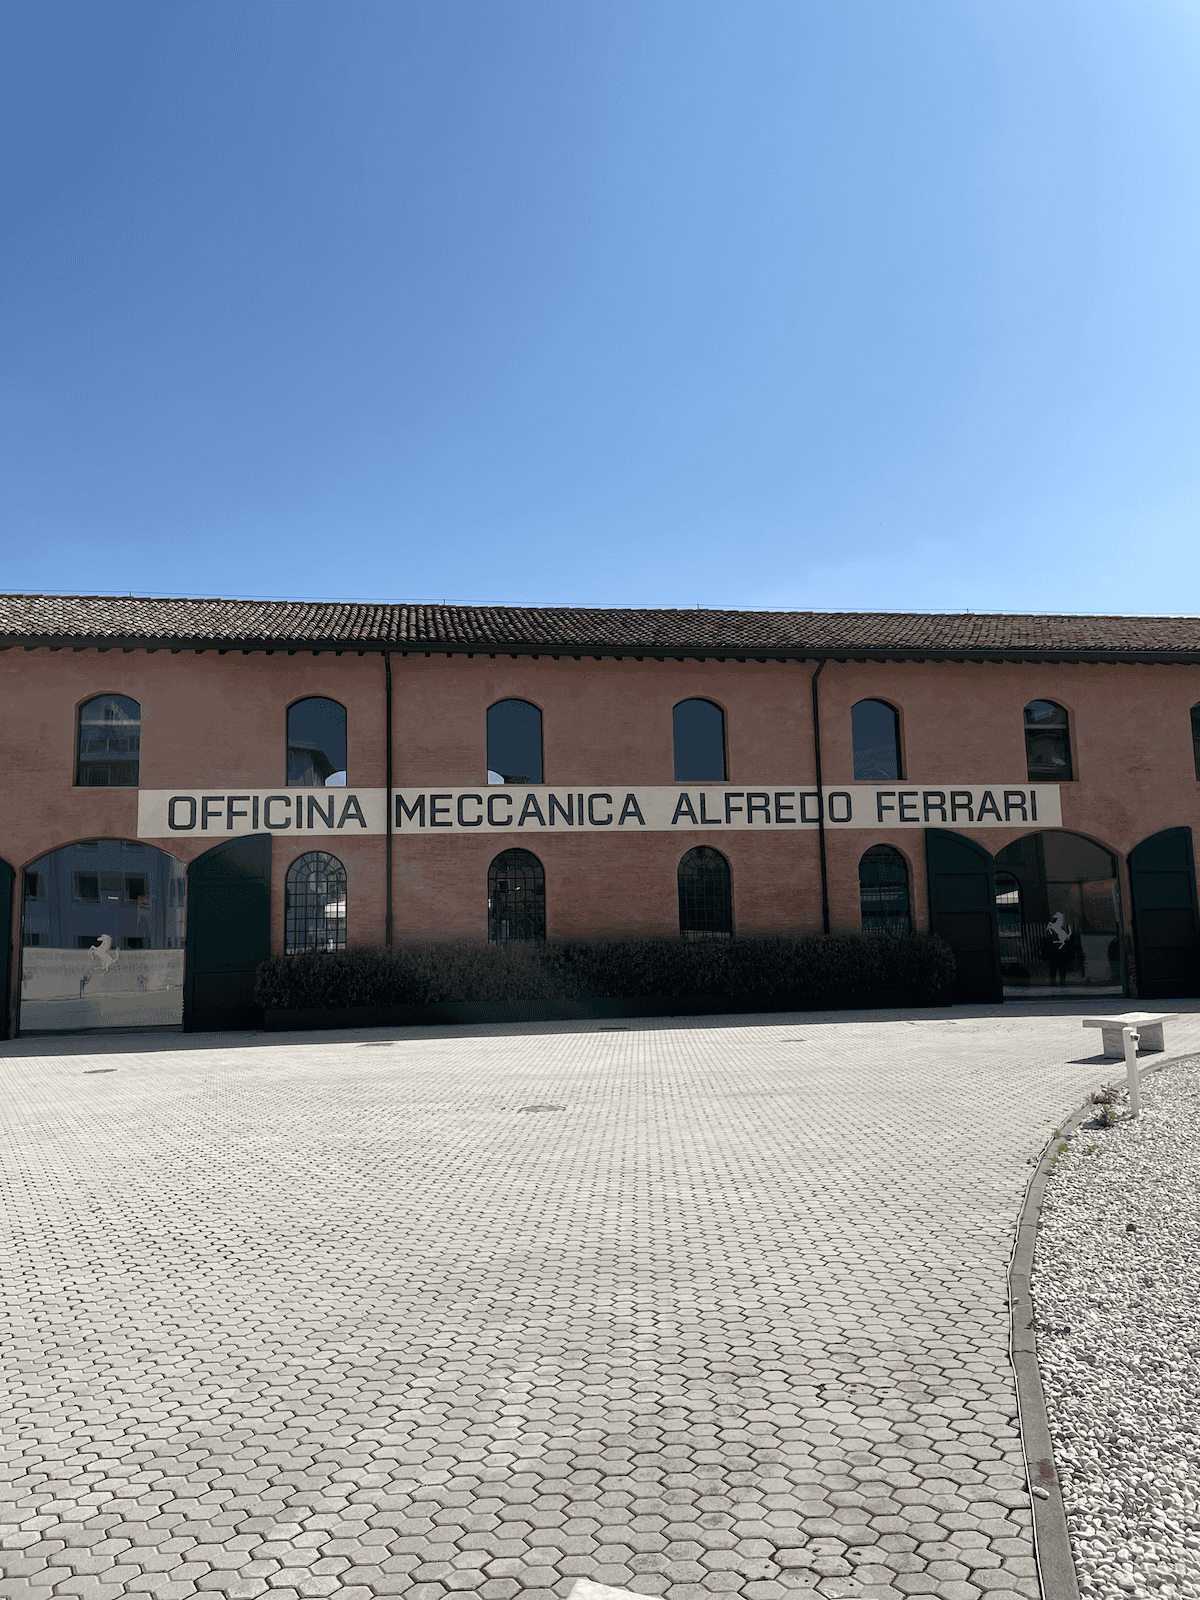 a brick wall that says 'Officina meccanica Alfredo Ferrari'